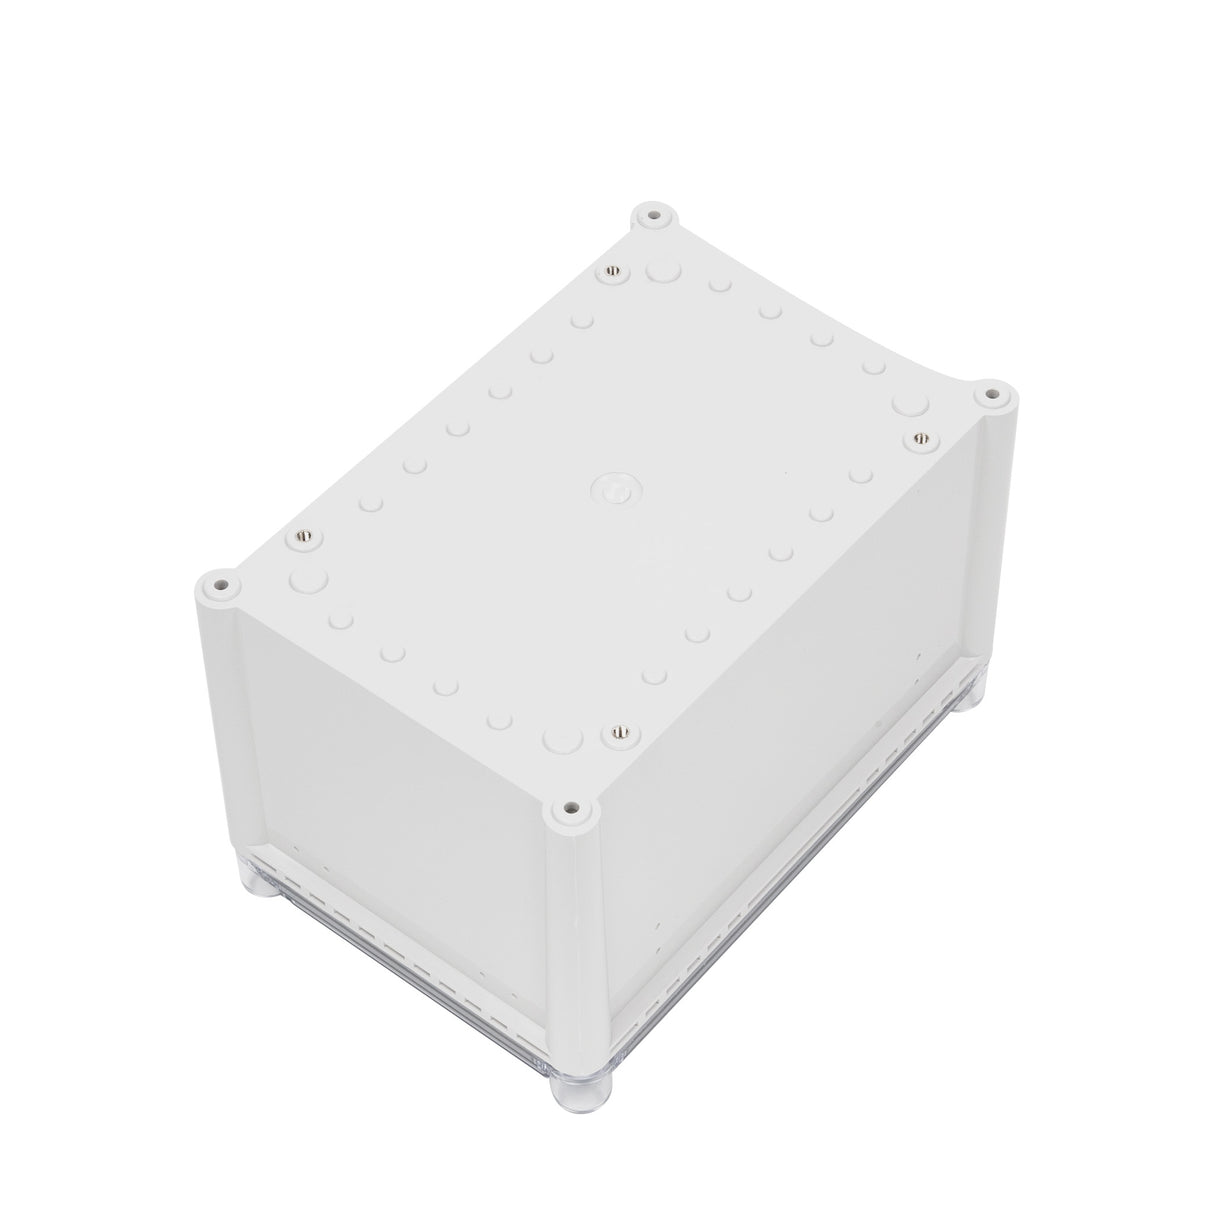 Boxco S-Series 7.48 x 11.02 x 7.09 Inches(190x280x180mm) Plastic Enclosure, IP67, IK08, ABS, Transparent Cover, Screw Type